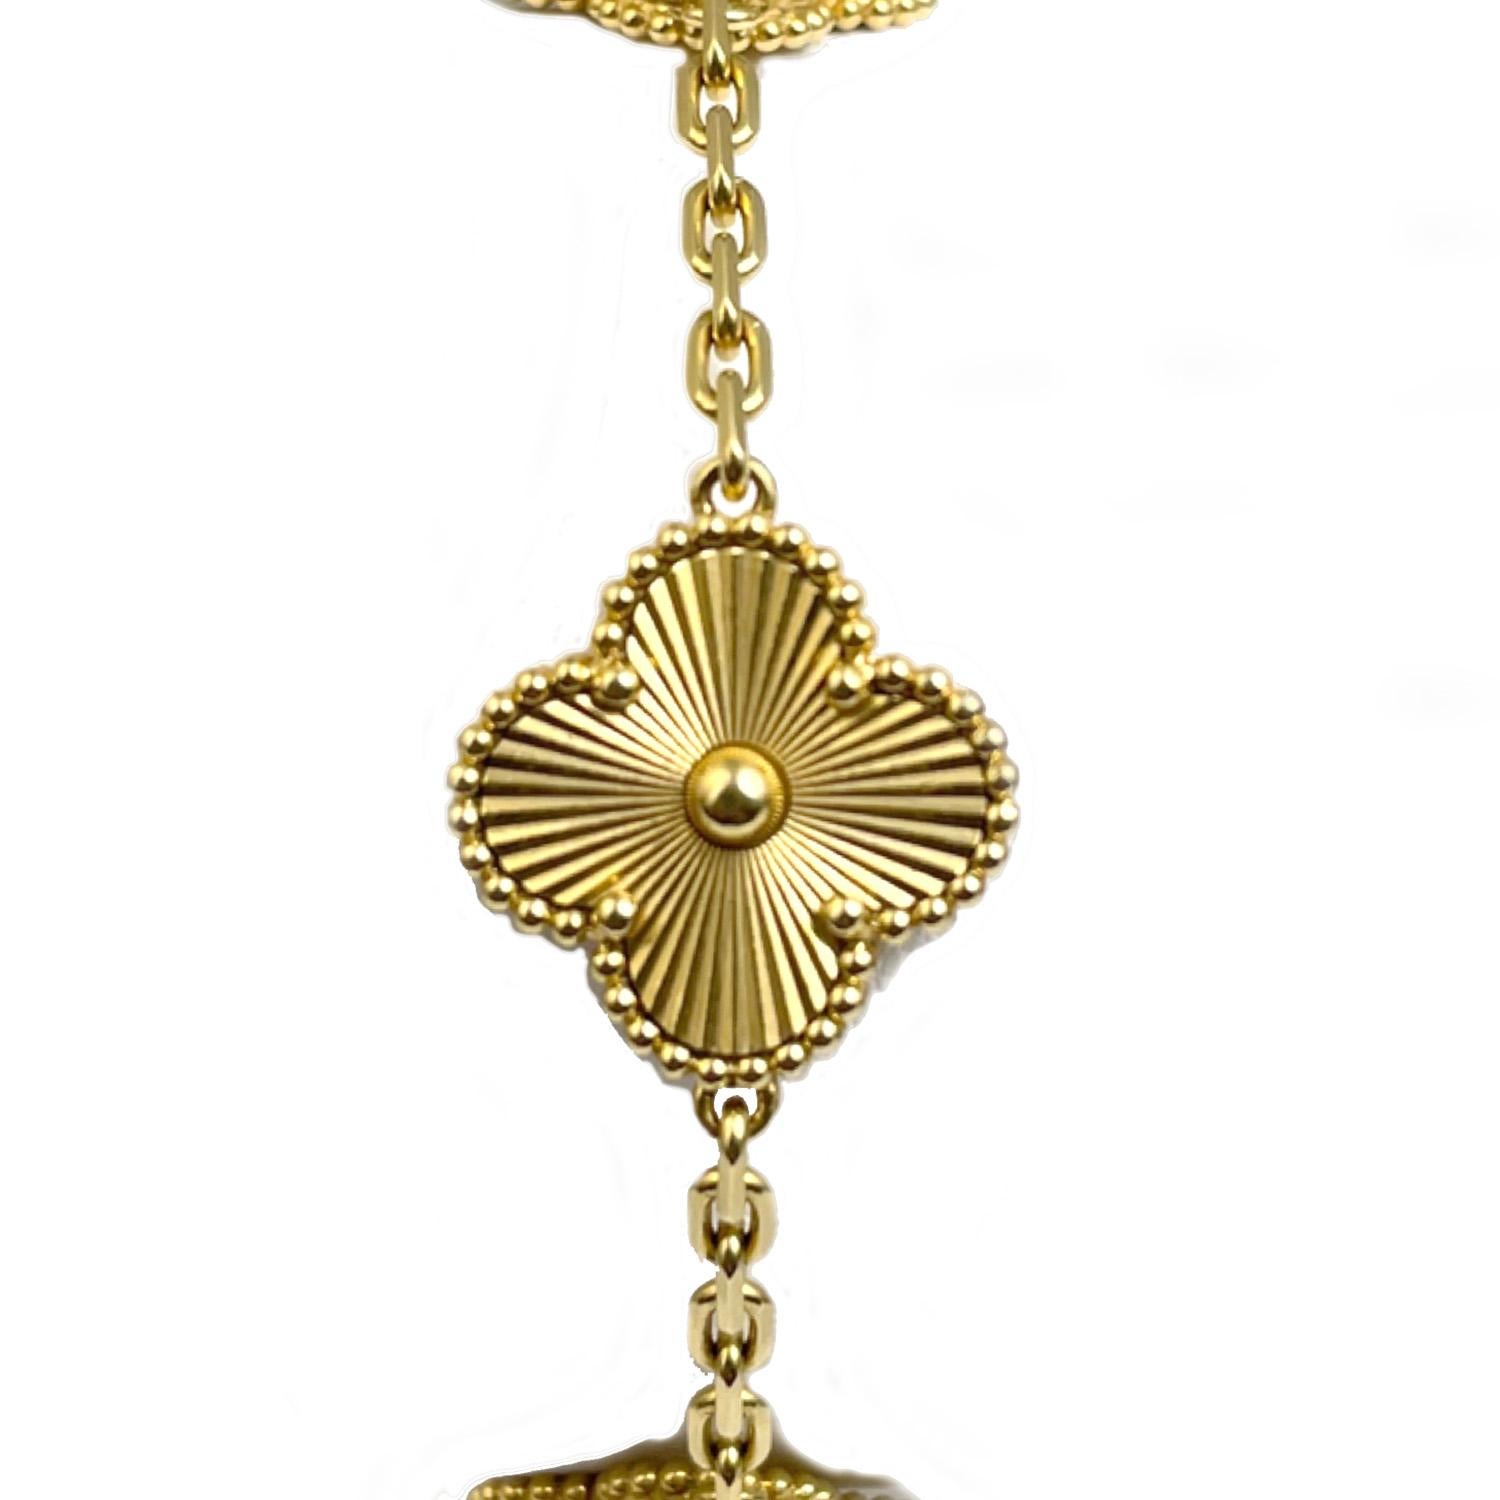 Designer:  Van Cleef & Arpels 

Collection:  Vintage Alhambra

Style:  5 Motif Bracelet

Metal Type: Yellow Gold 

Metal Purity: 18k

Hallmarks: VCA; Serial #; AU750 

​Includes: 24 Month Brilliance Jewels Warranty